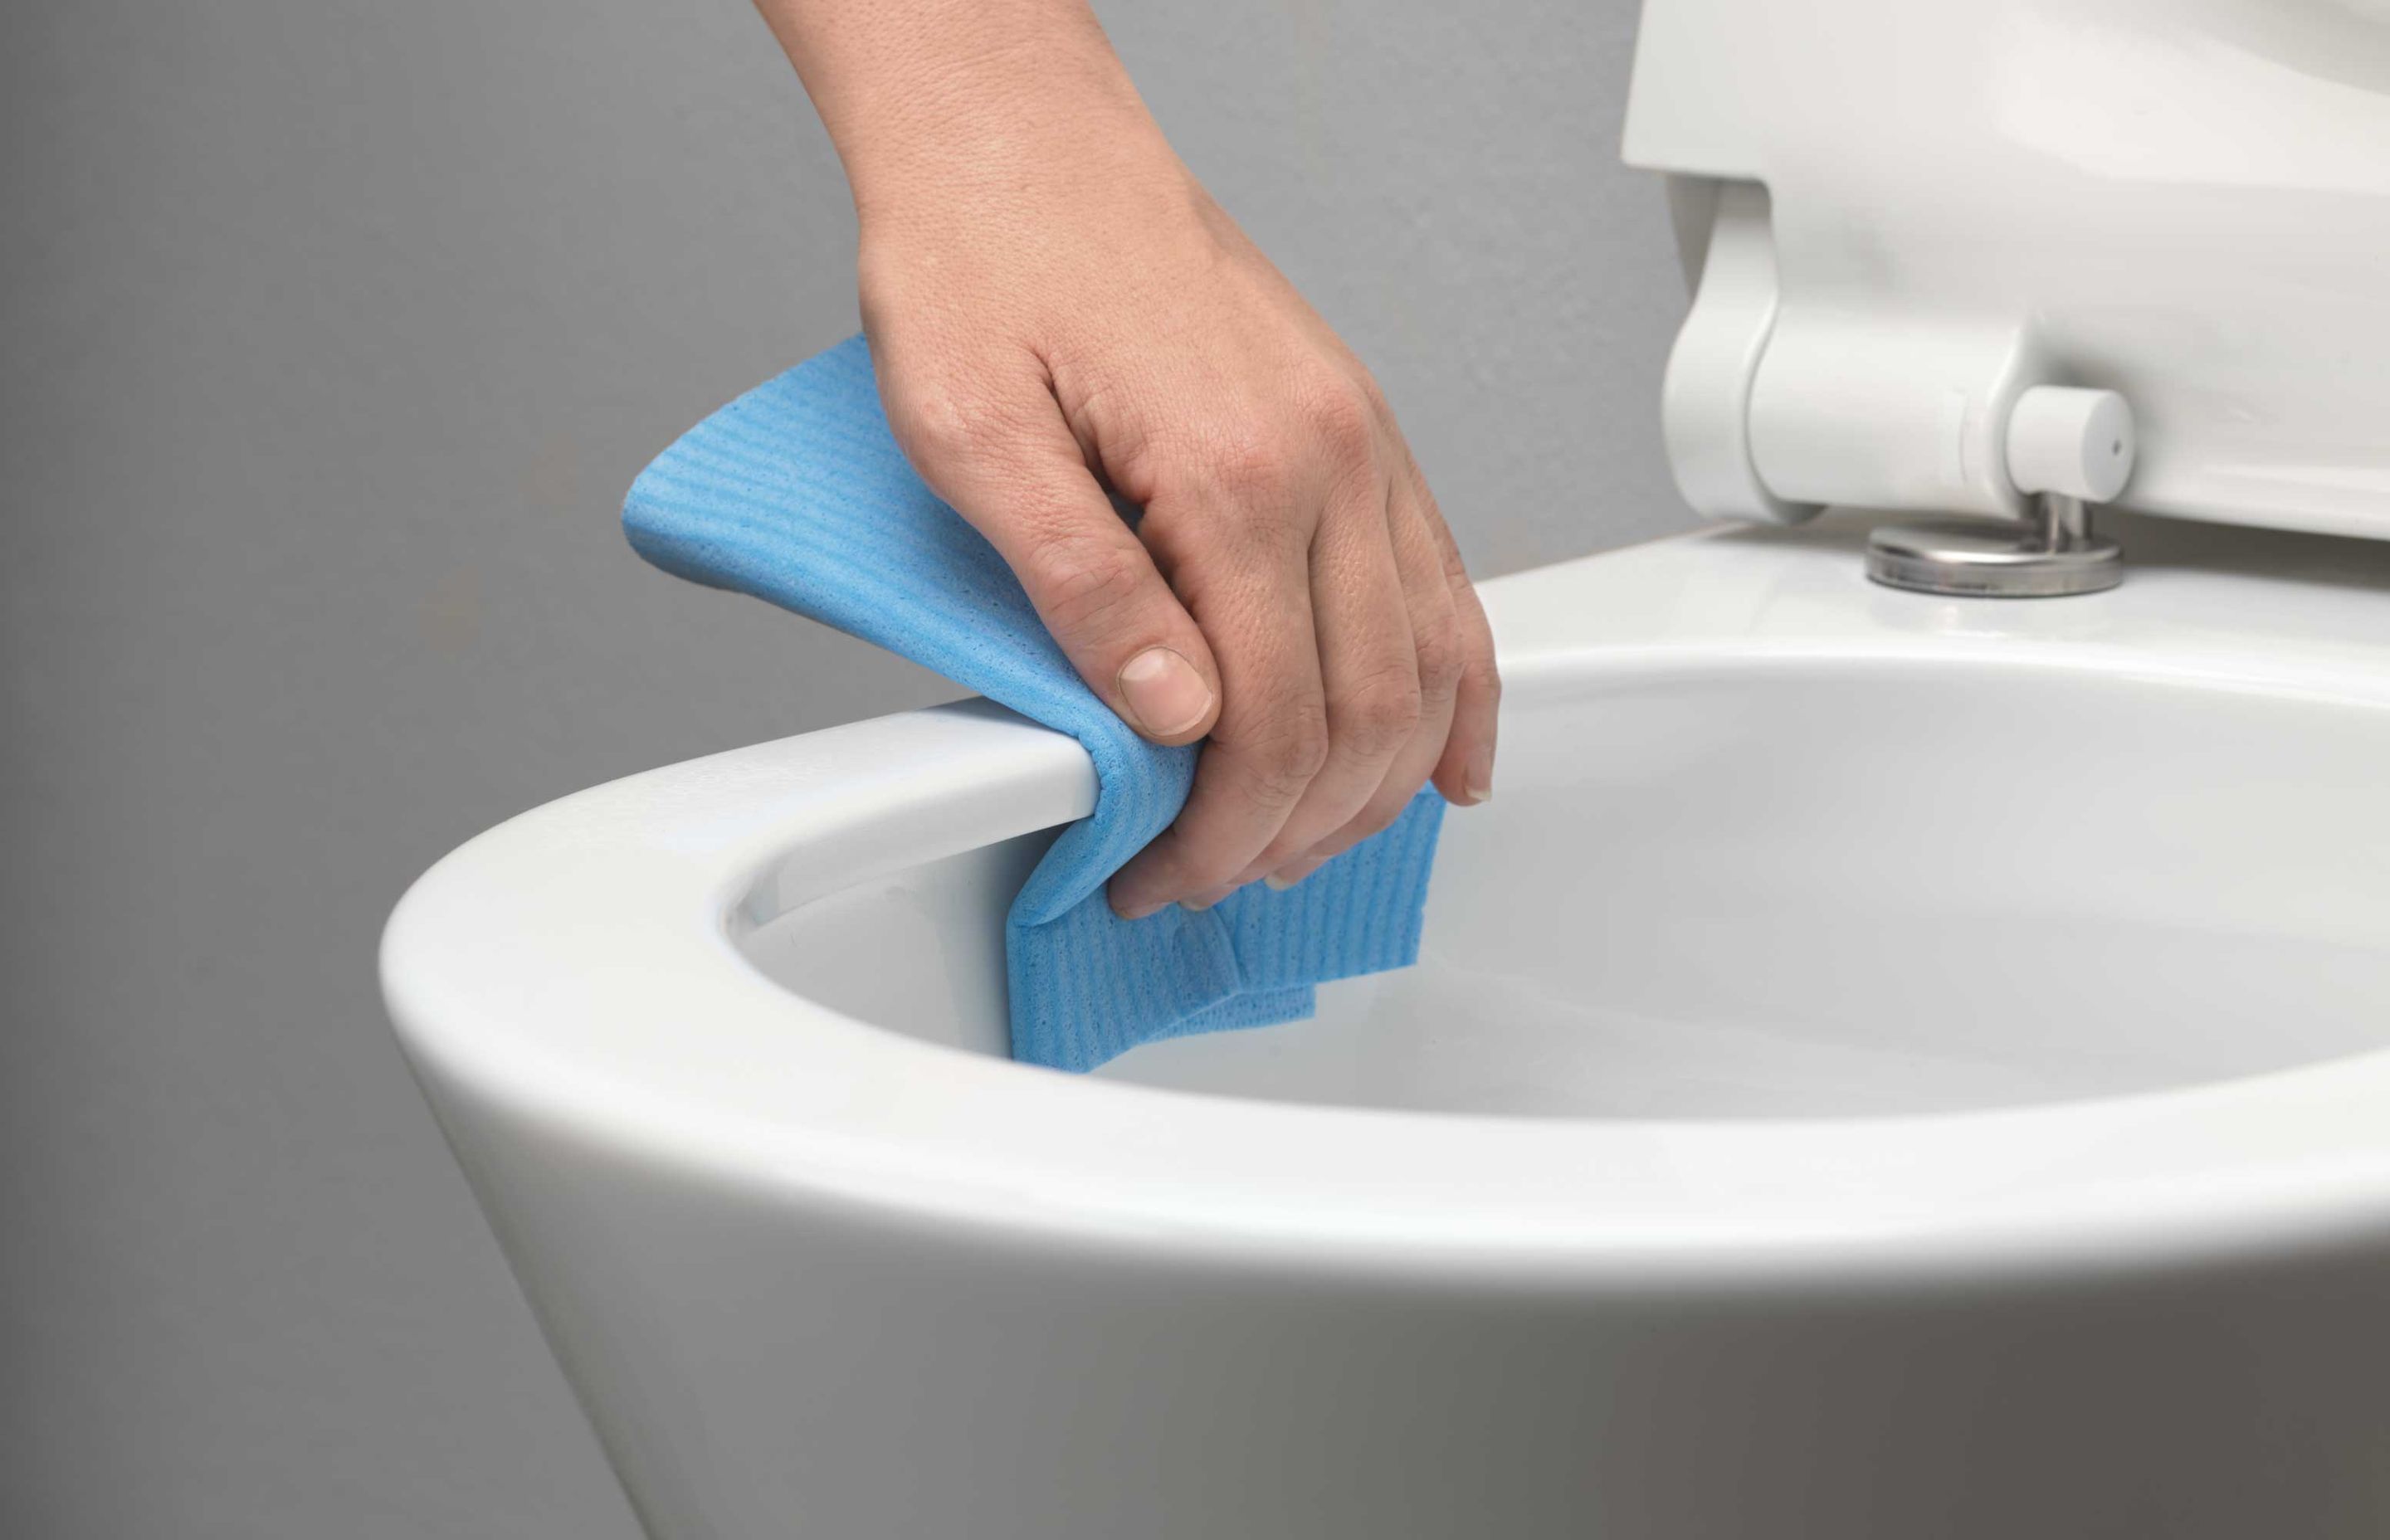 Superior sanitaryware: the latest technology in bathroom hygiene